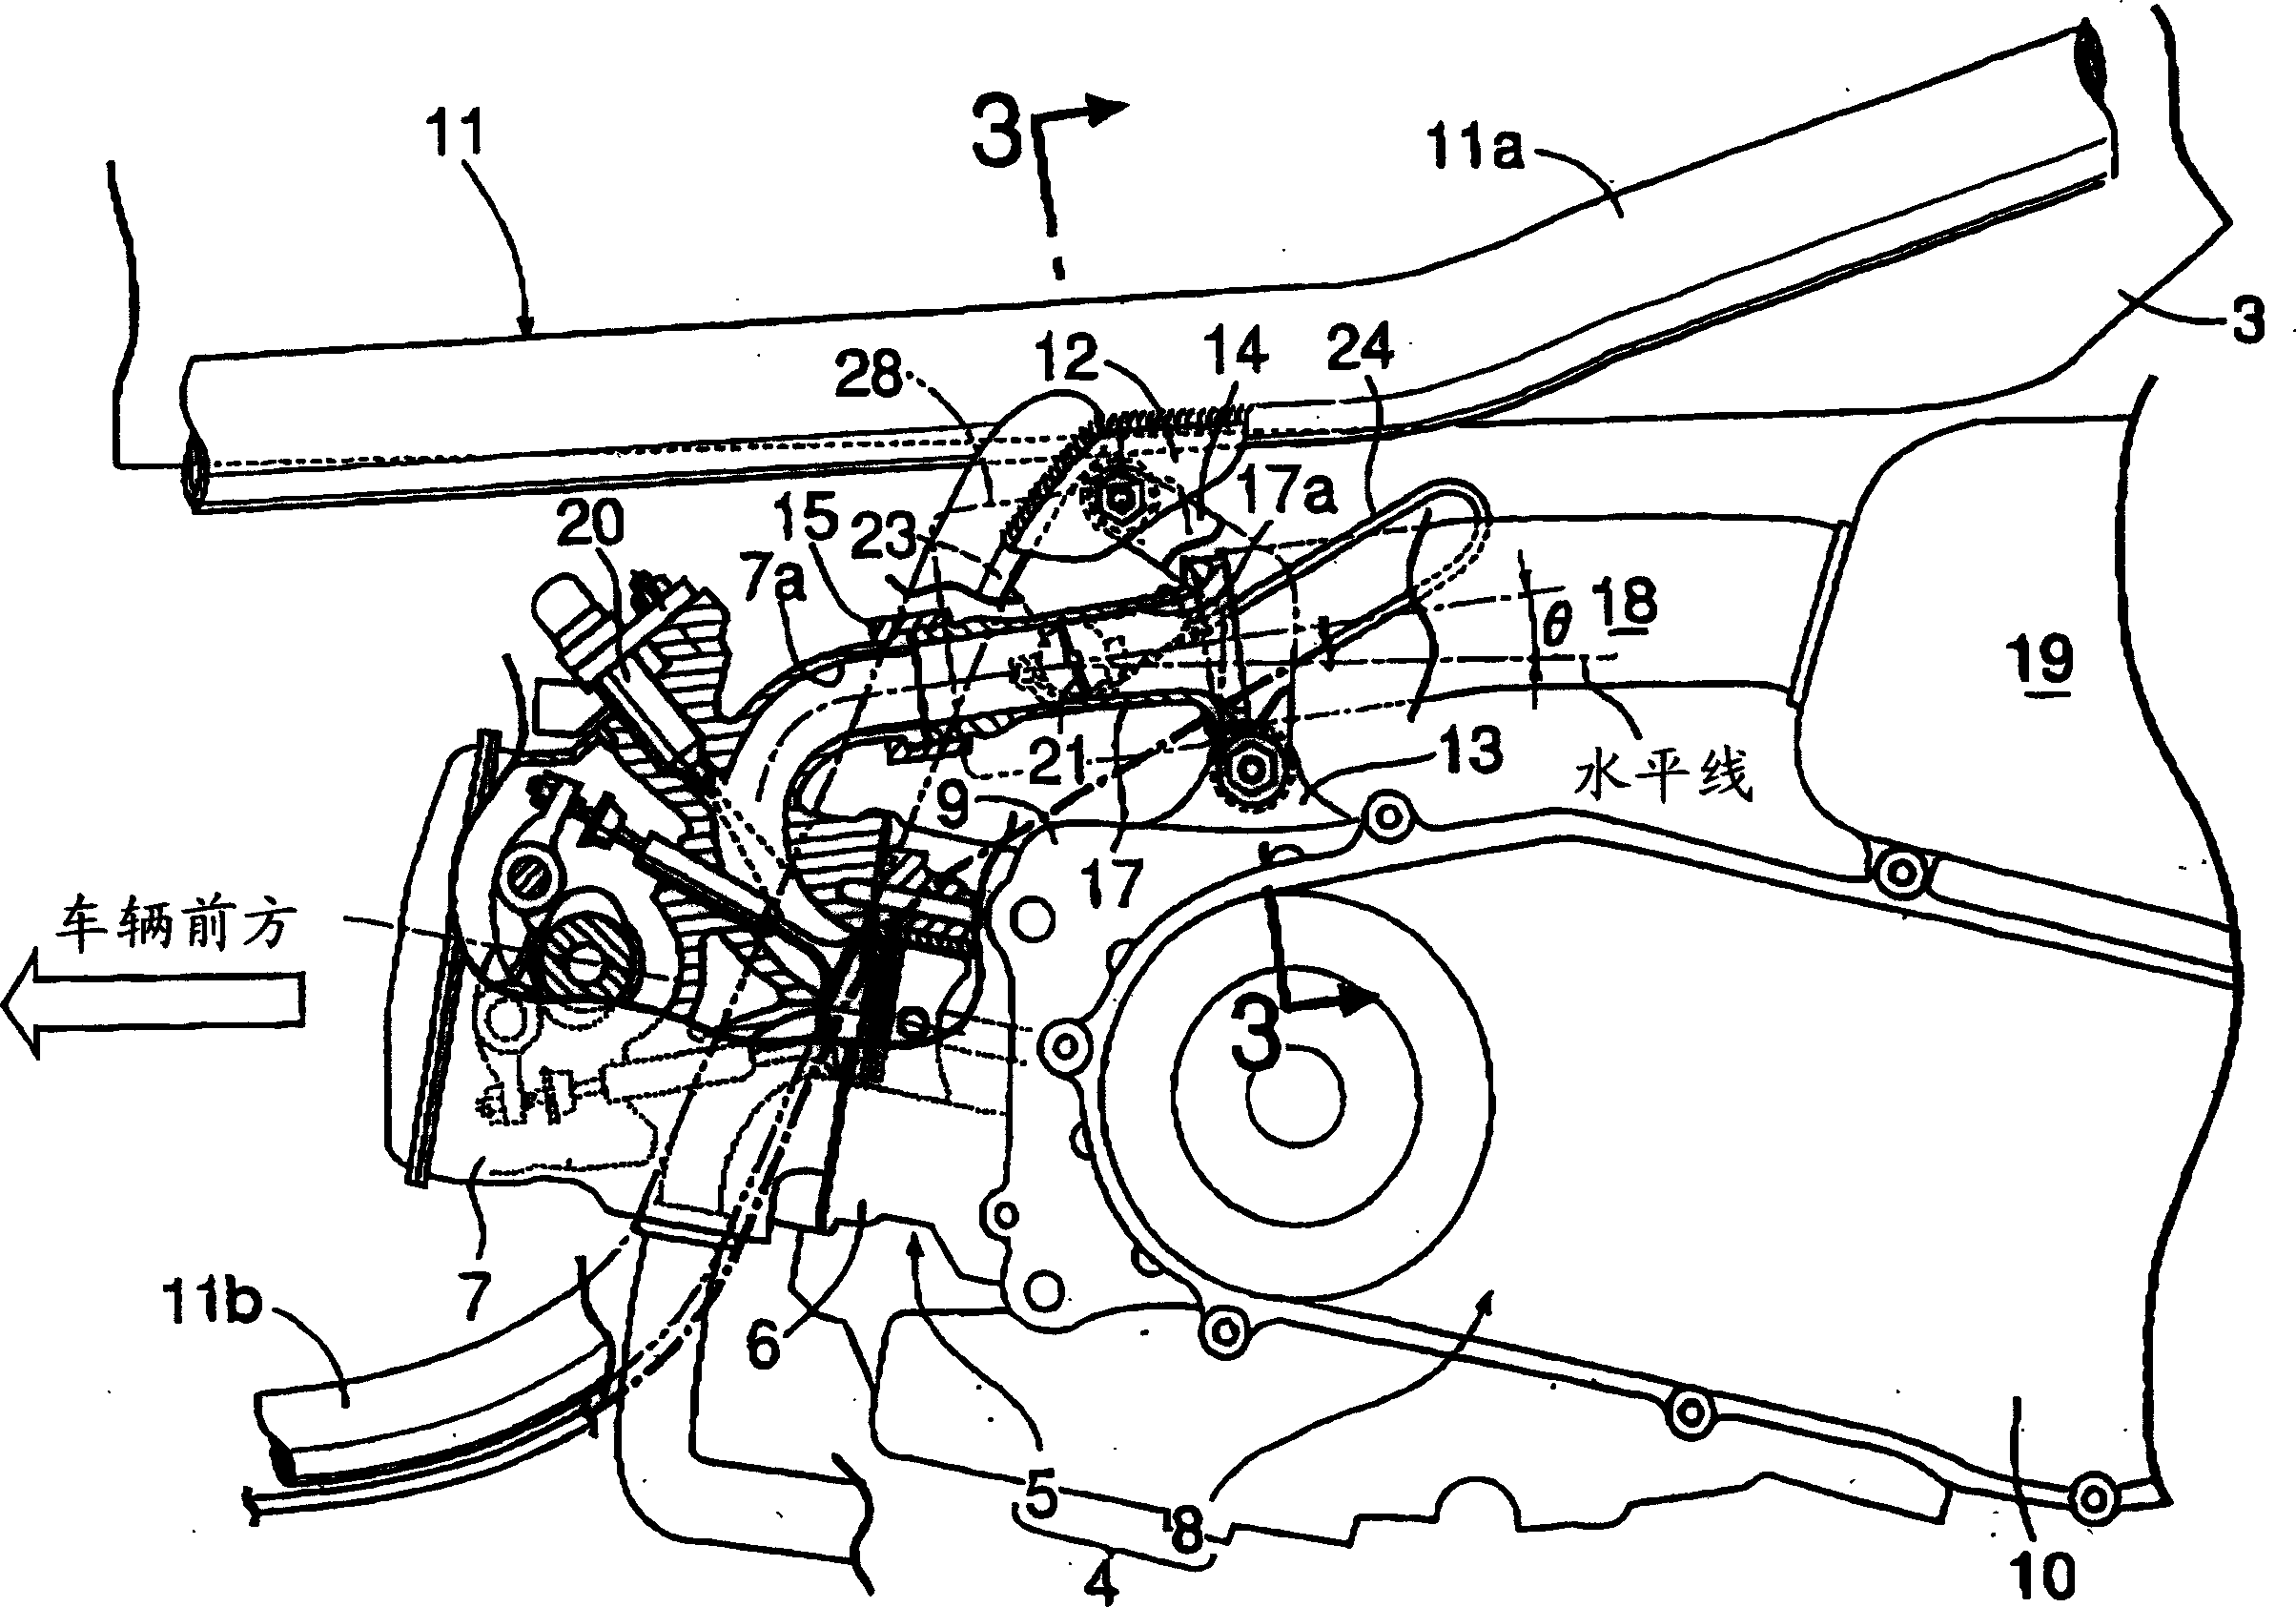 Engine intake control device